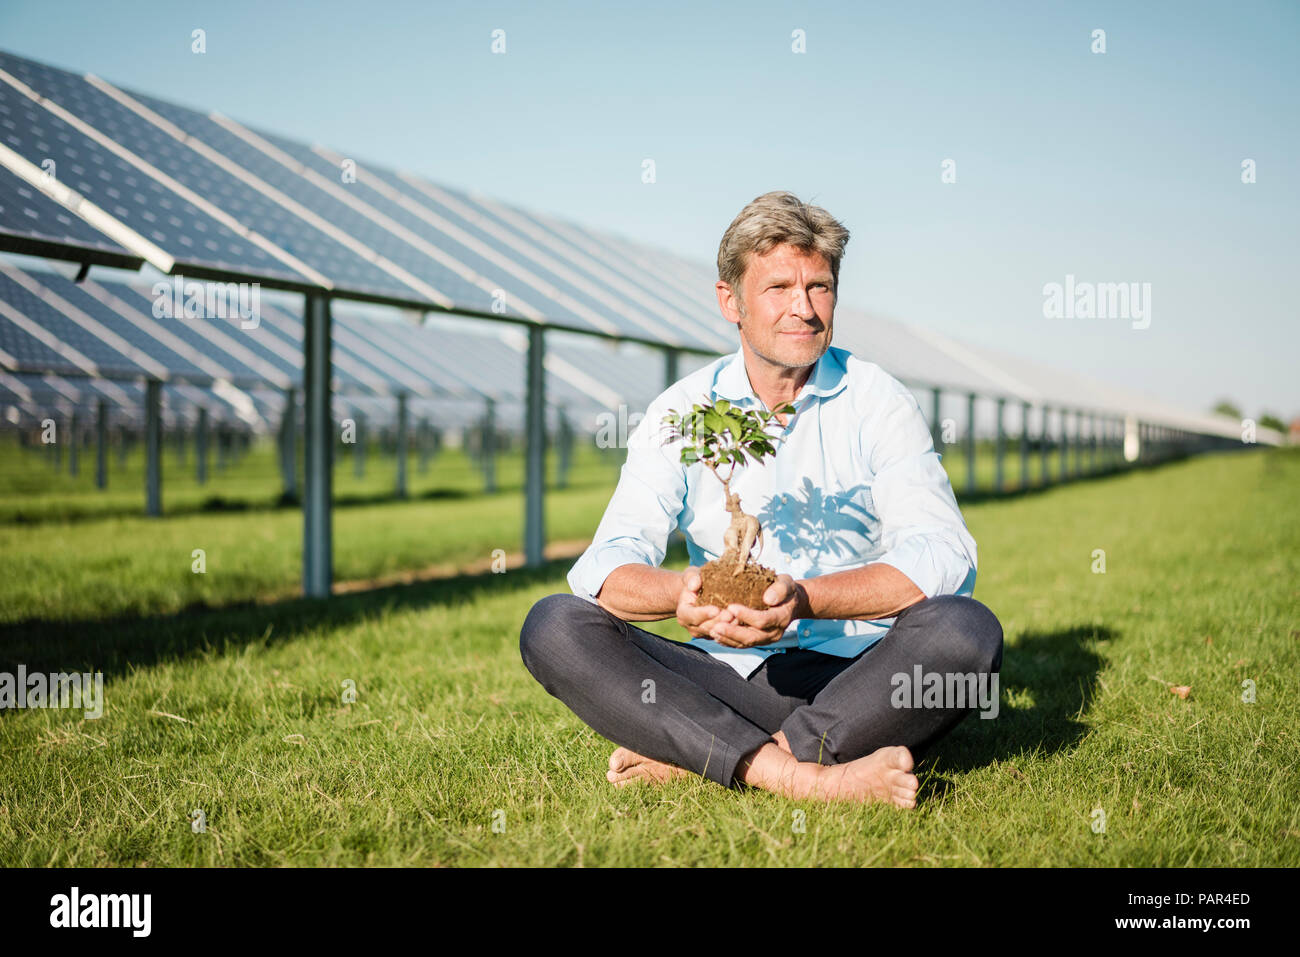 Uomo maturo holding ligustro, impianto solare Foto Stock